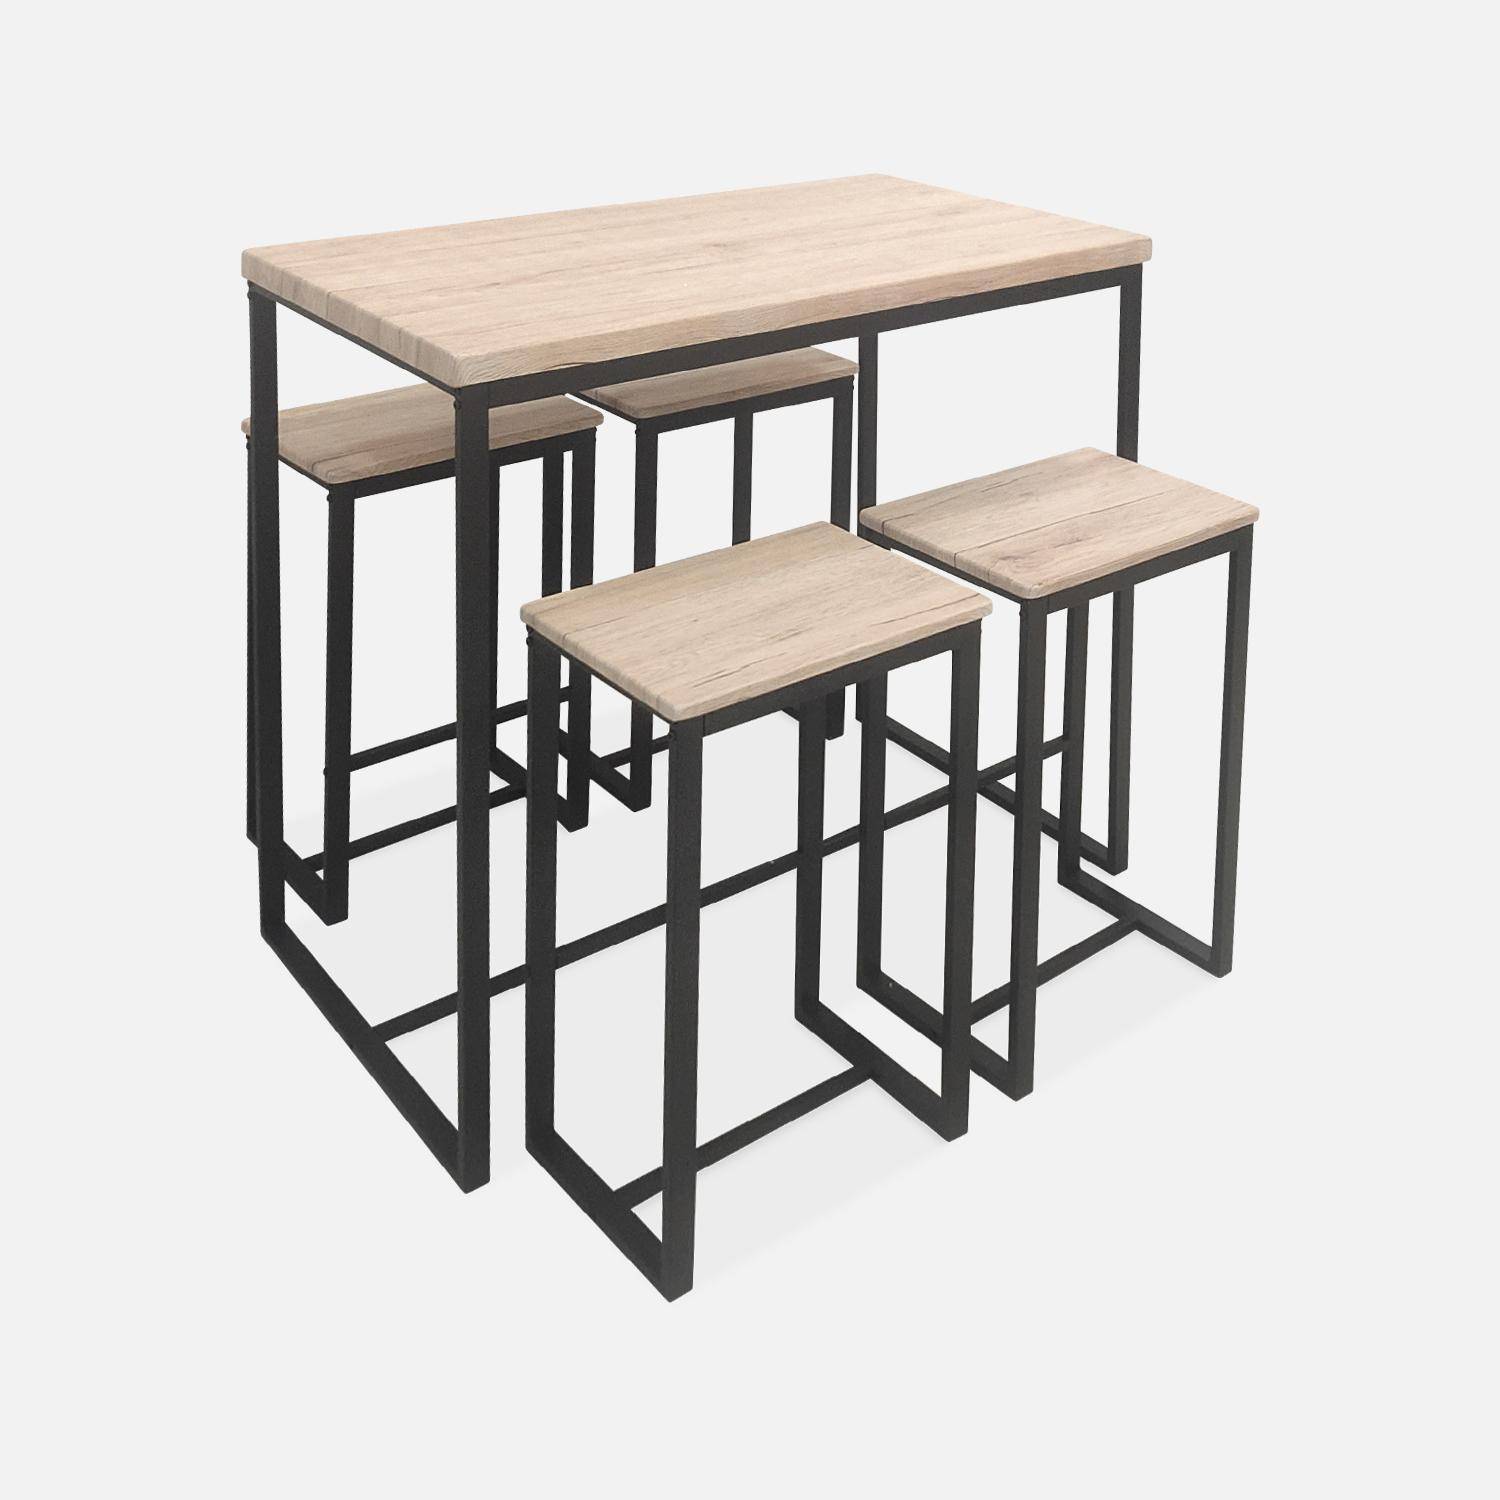 Industrial bar style table set with 4 stools, dining set 100x60x90cm - Loft - Black,sweeek,Photo3